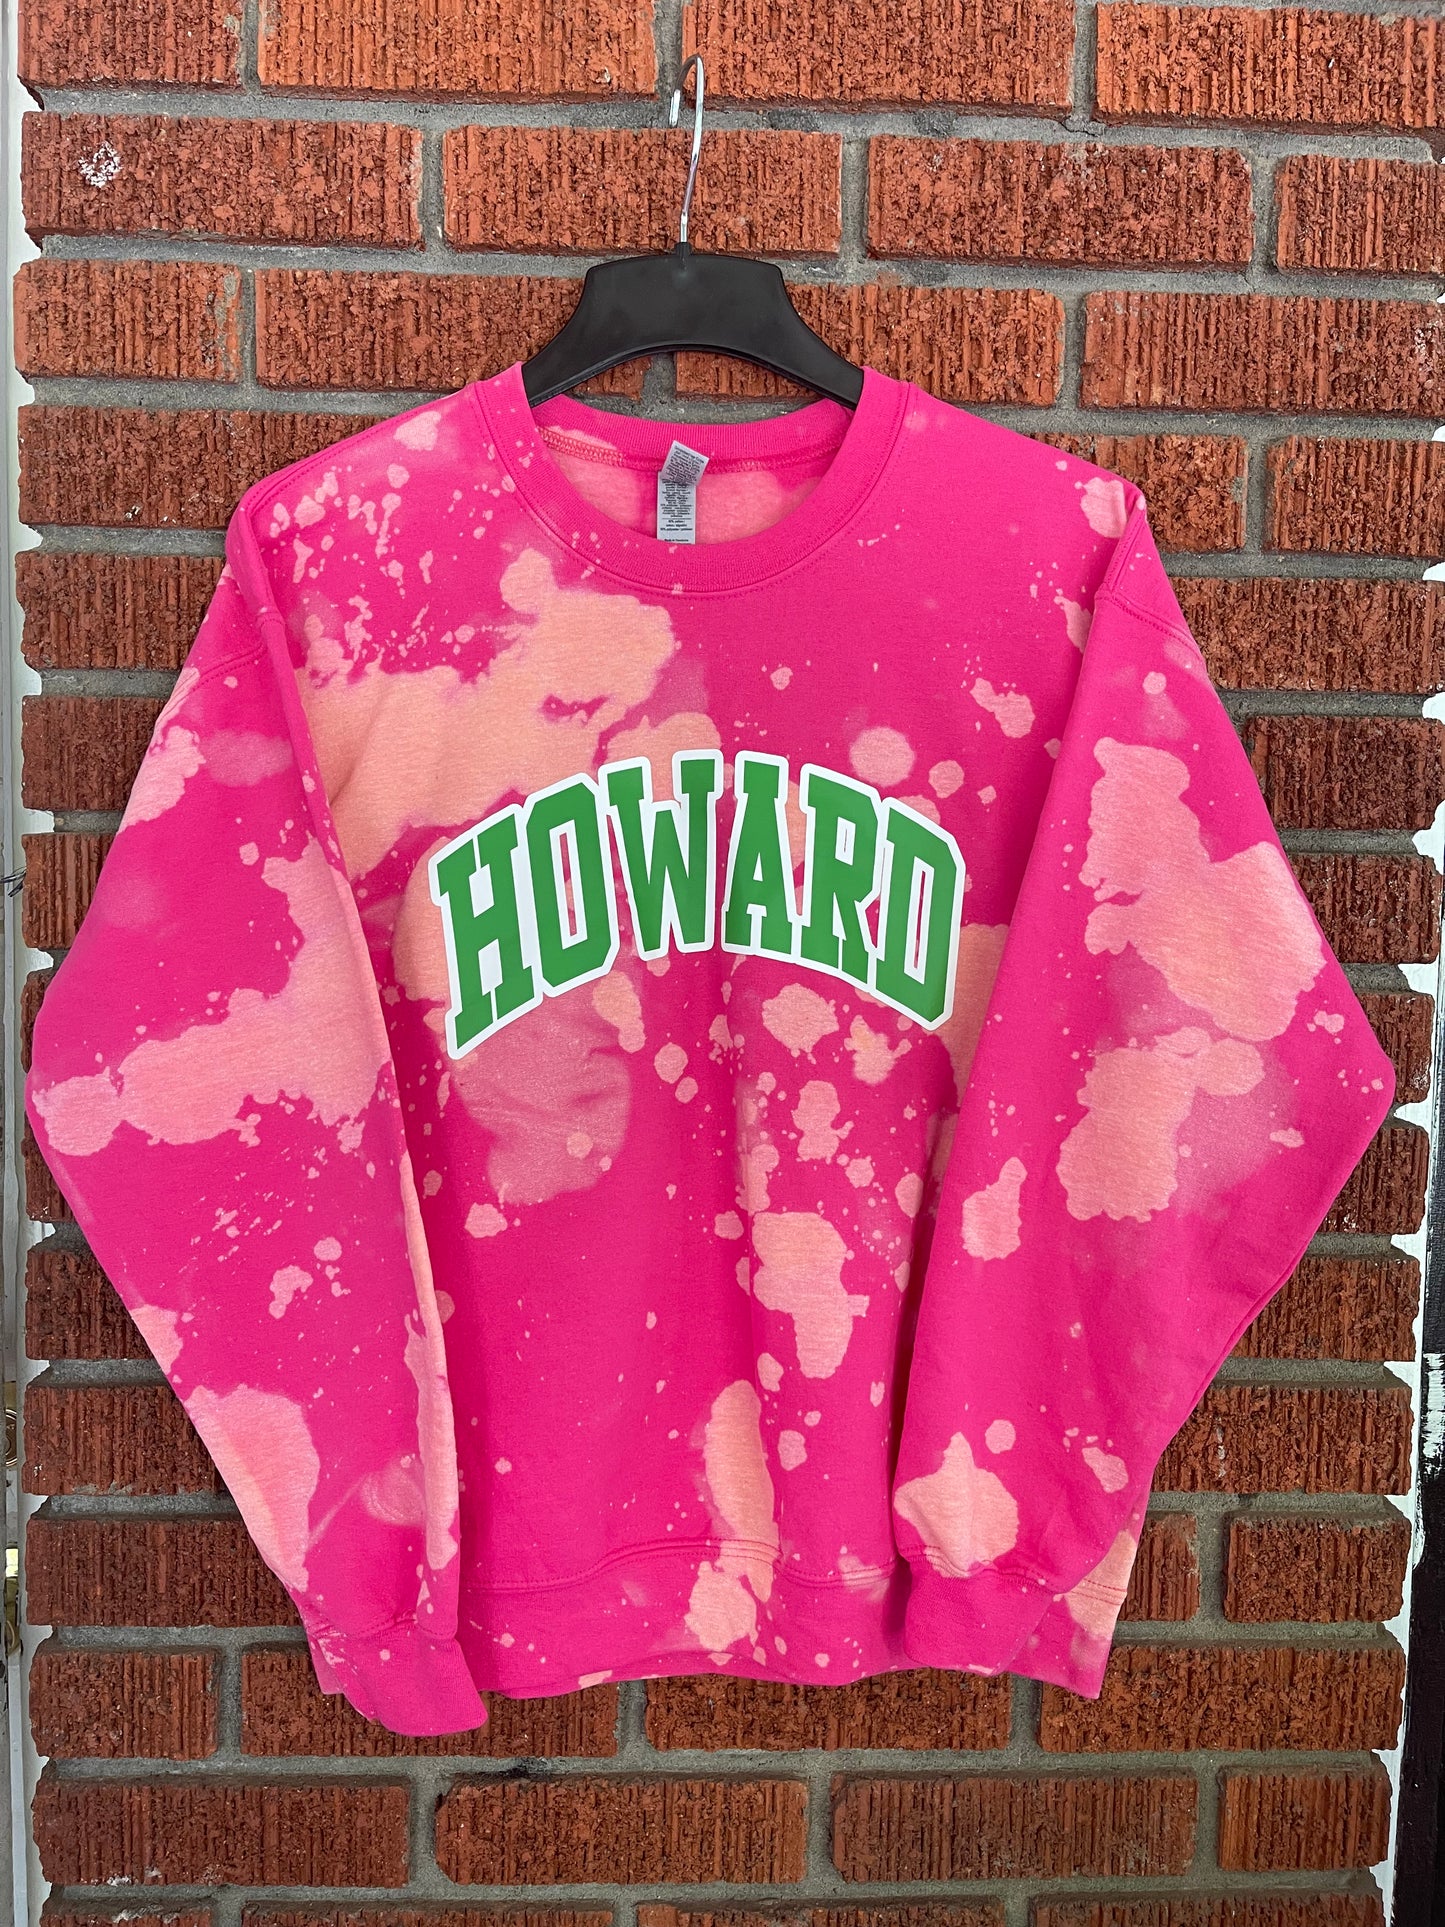 Howard HU pink and green AKA Alpha Kappa Alpha Sweatshirt hand bleached handmade sweater